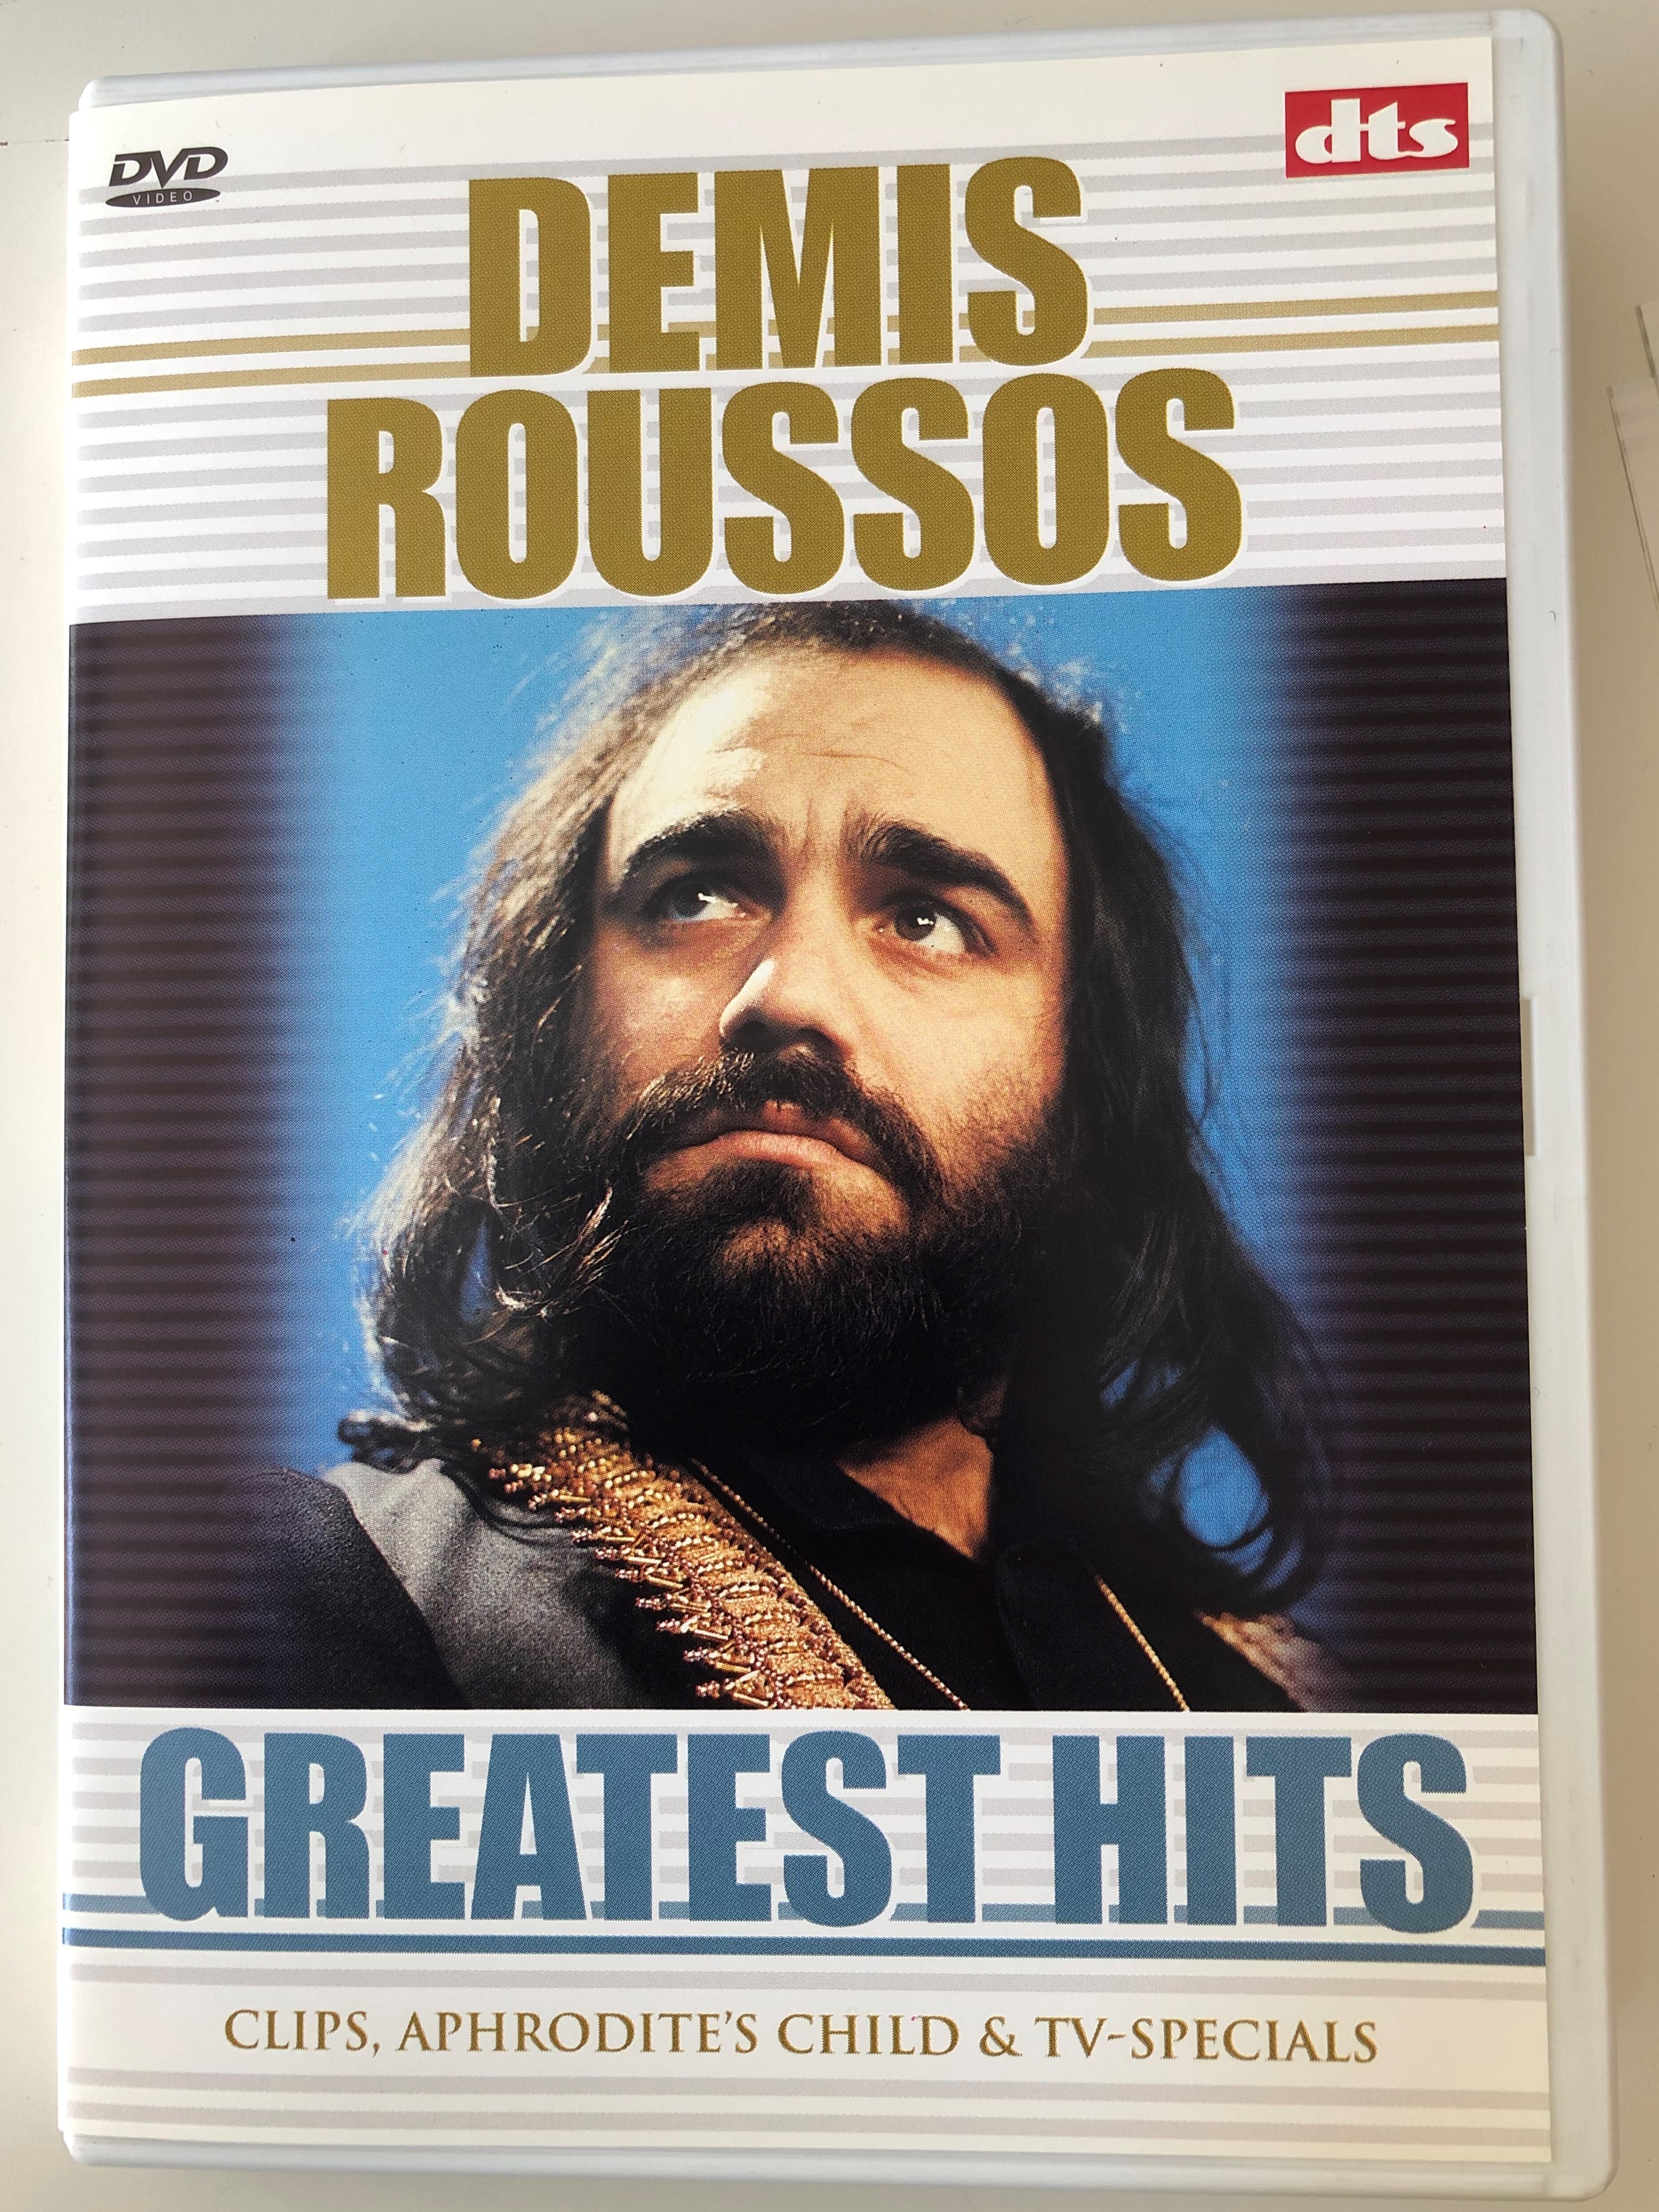 Demis Roussos DVD 2003 Greatest Hits / Clips, Aphrodite's Child &  TV-Specials / BR Music - BD 3006-9 - bibleinmylanguage